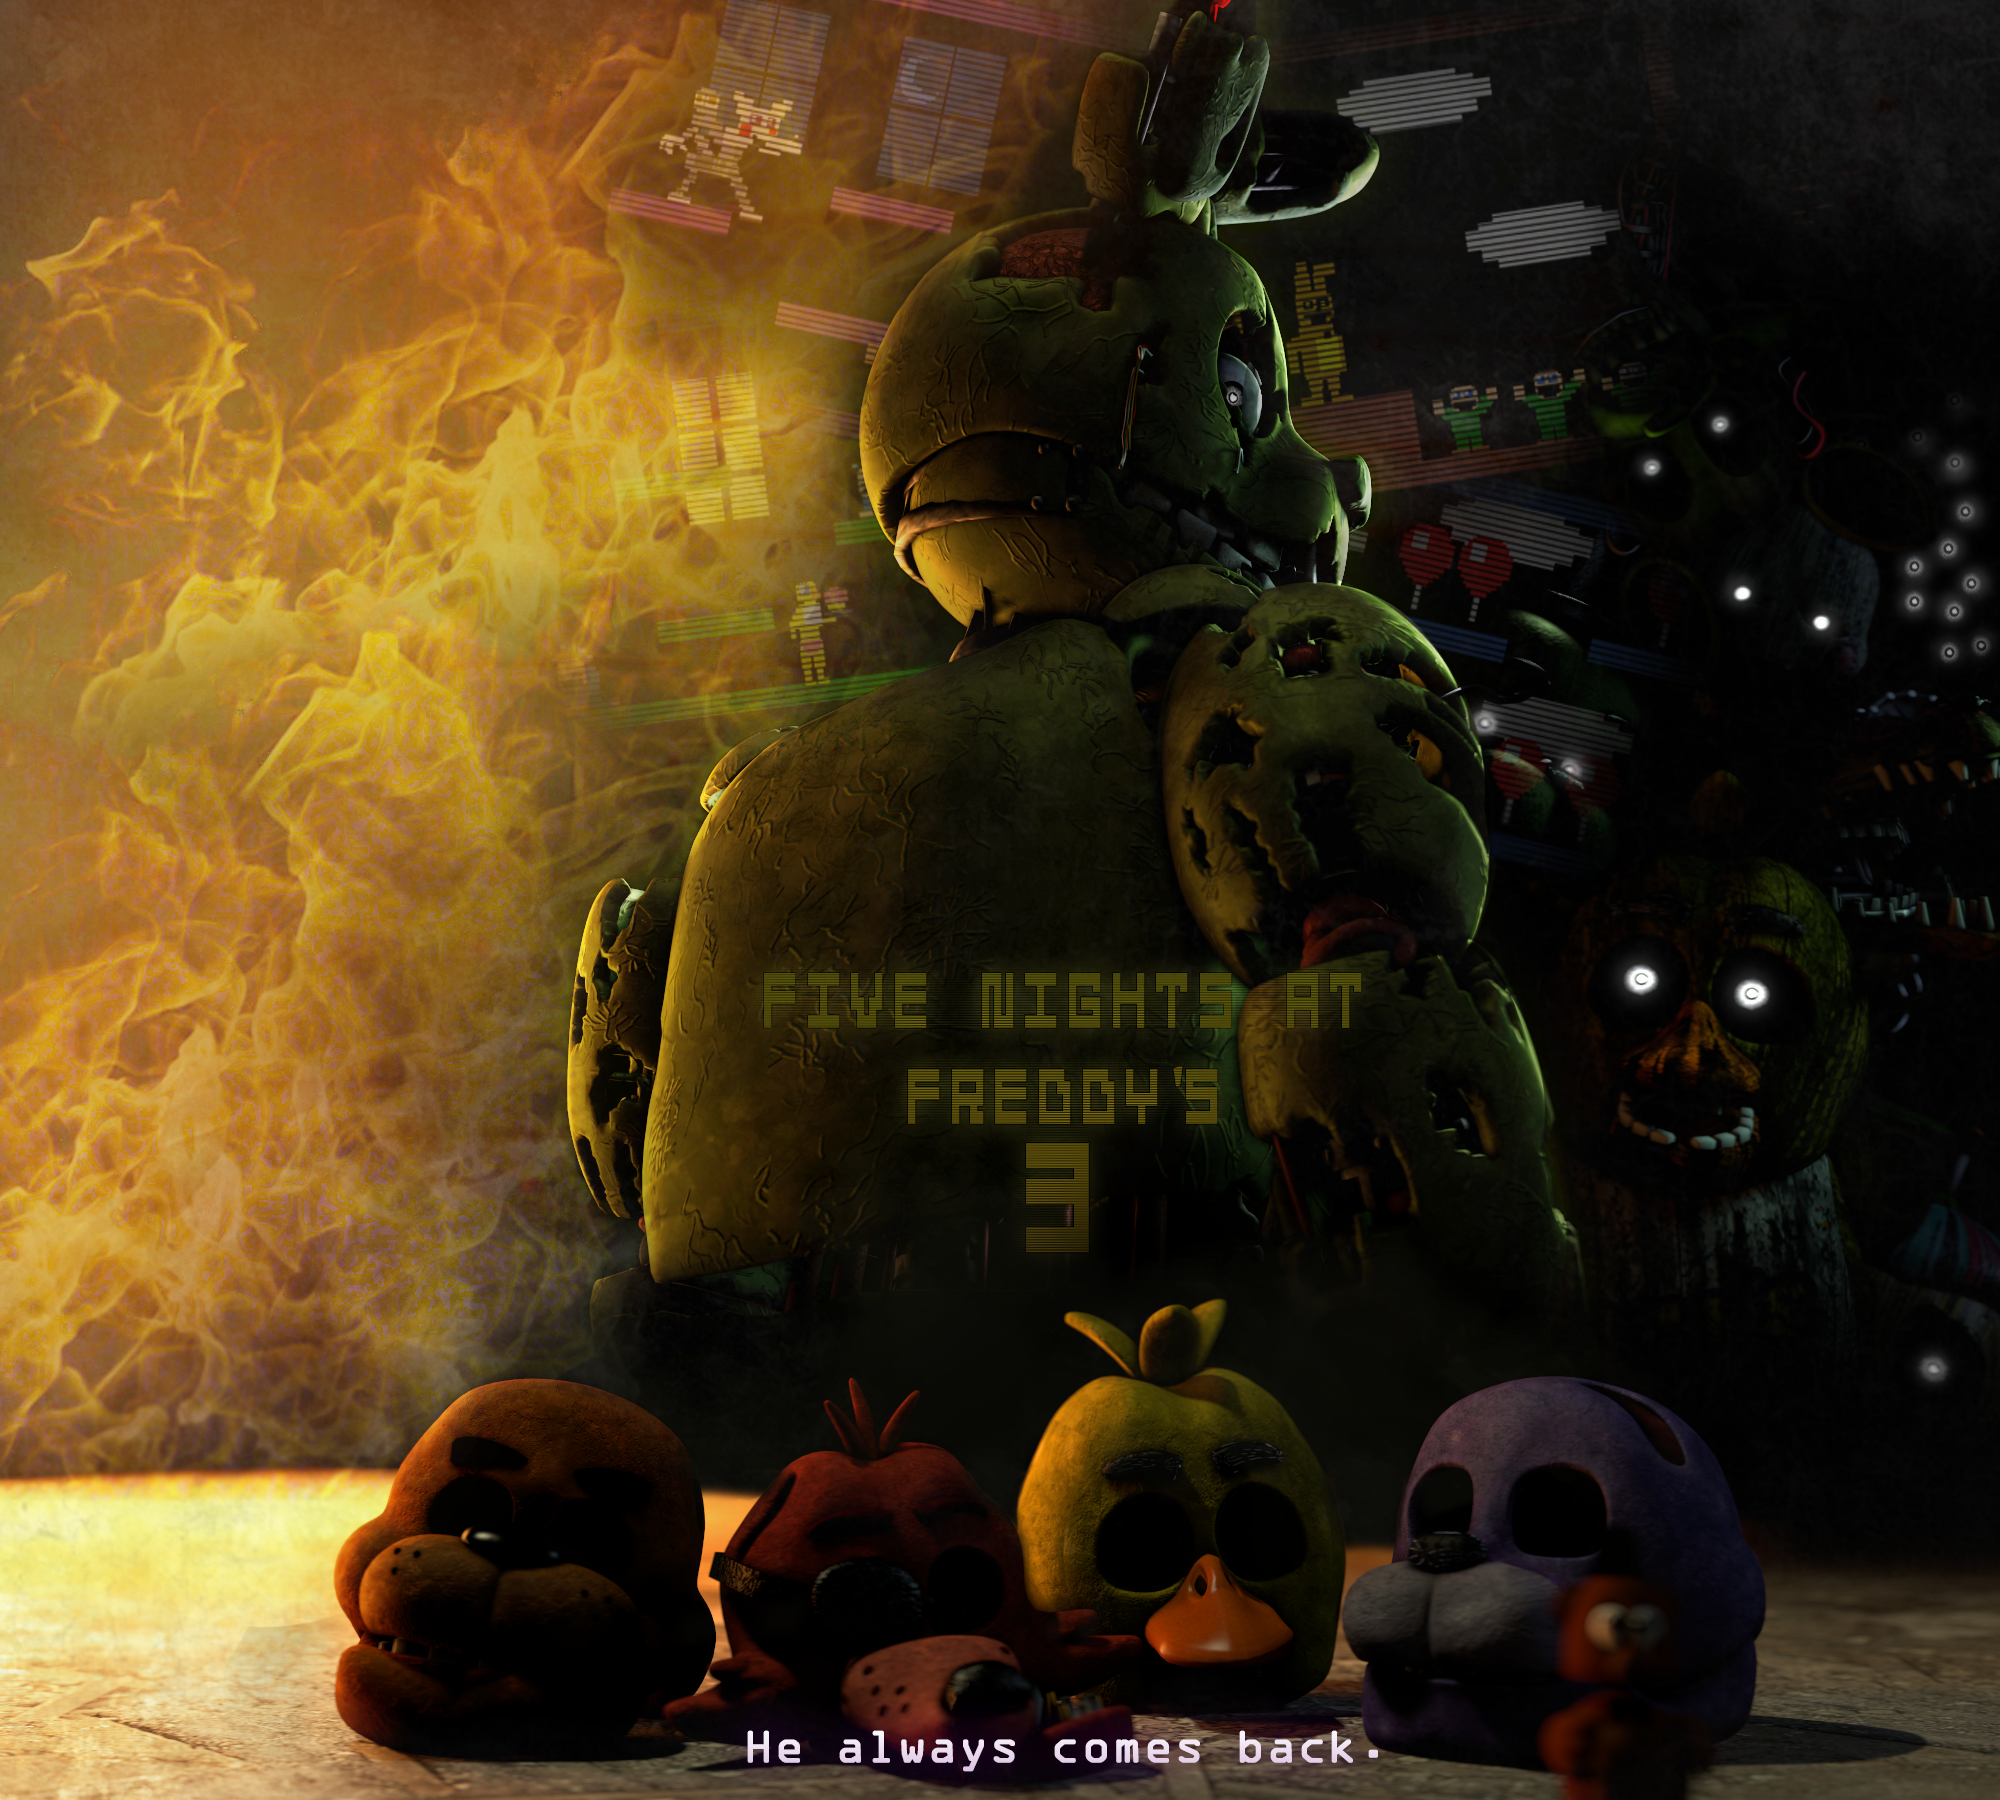 Five Nights at Freddy's 3: 5th Anniversary Poster : r/fivenightsatfreddys